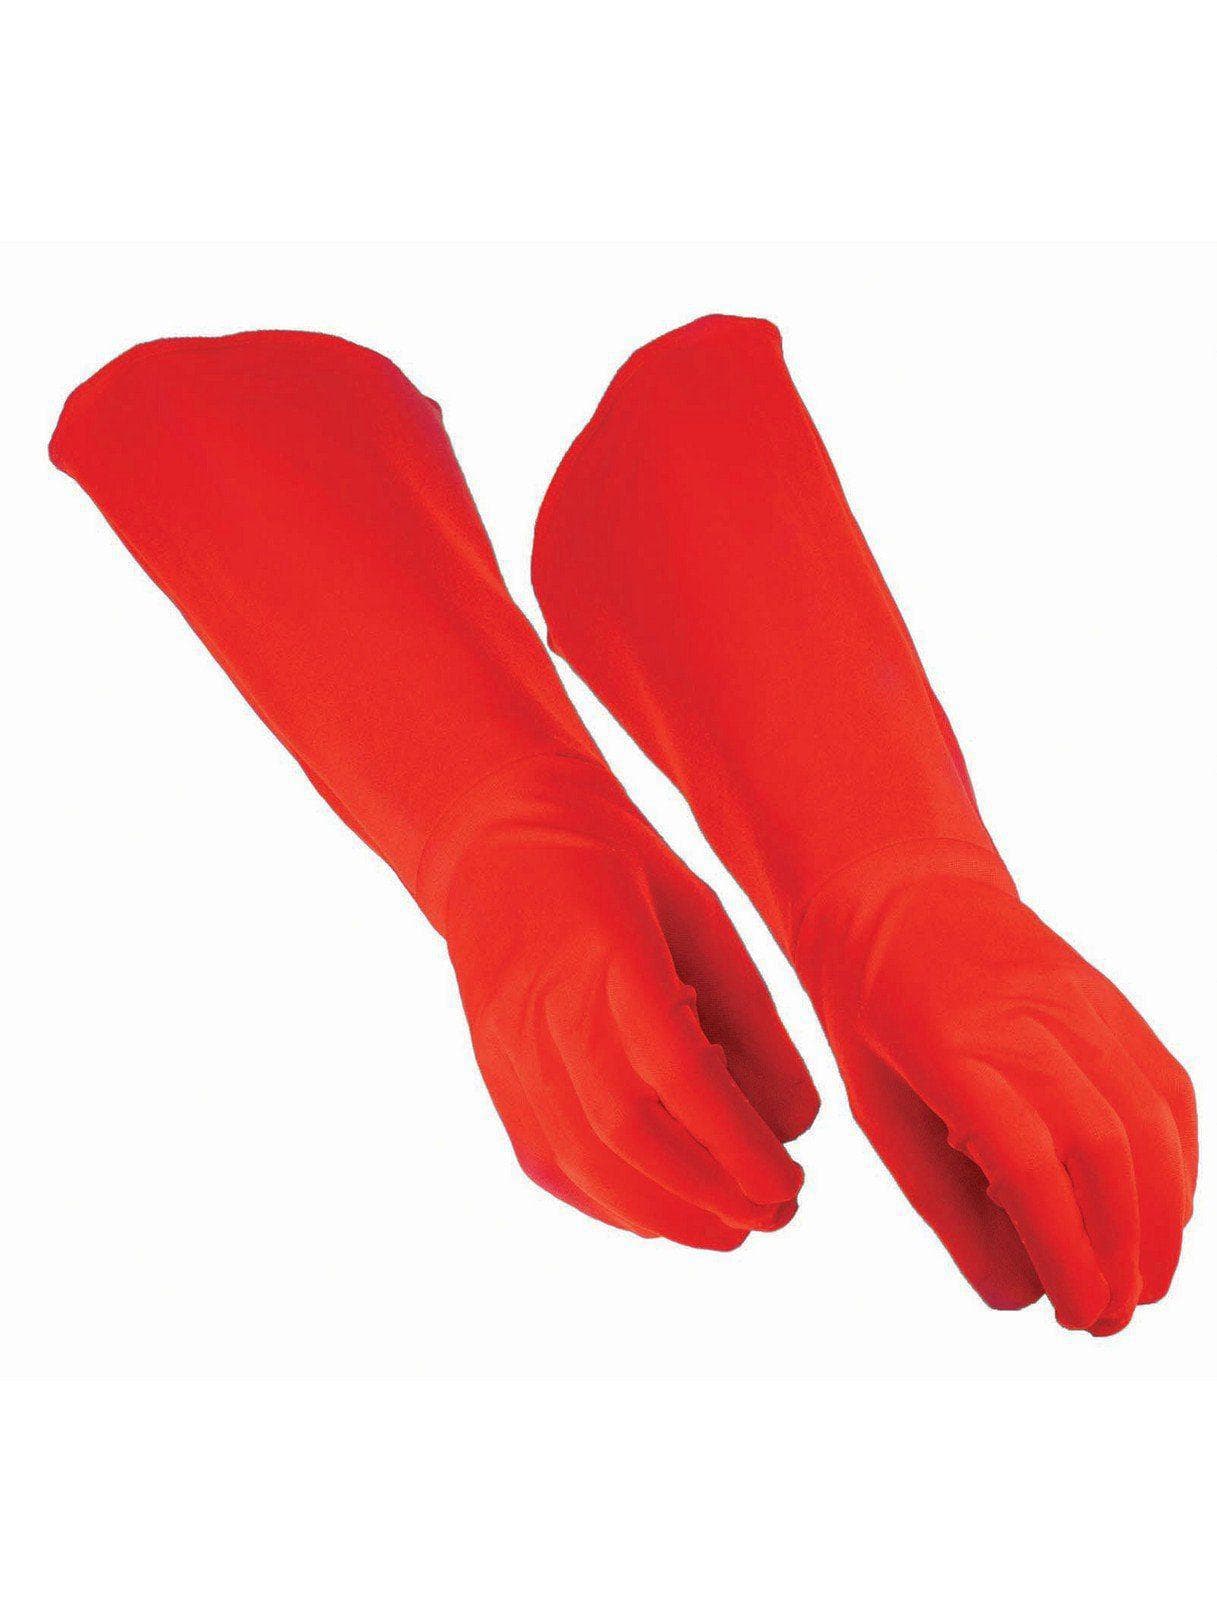 Adult Red Superhero Gloves - costumes.com